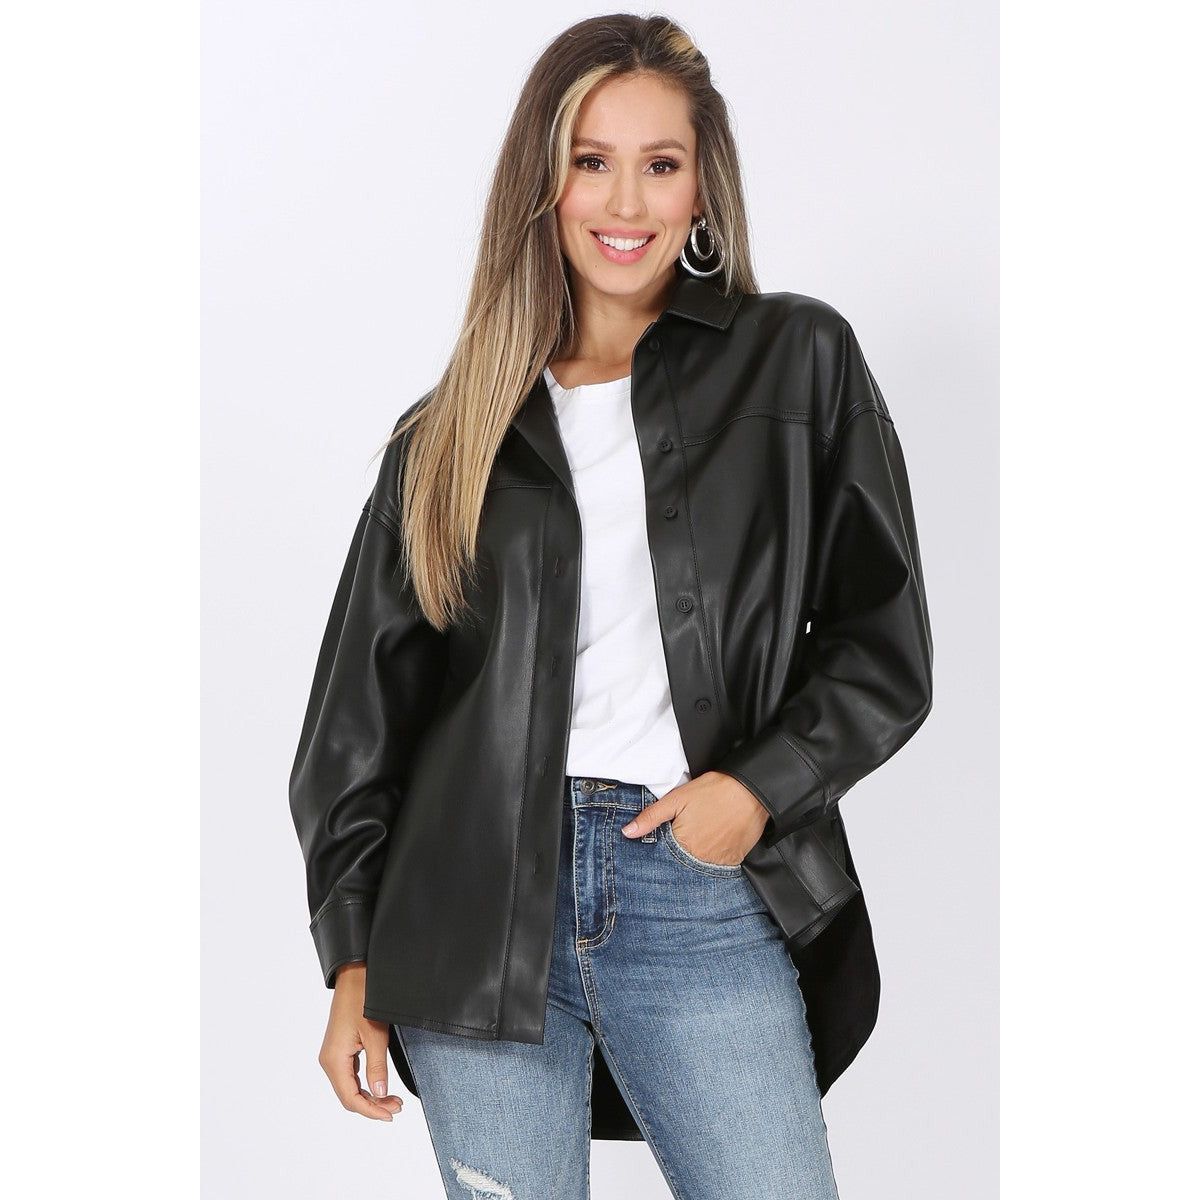 Tinley Faux Leather Black Jacket